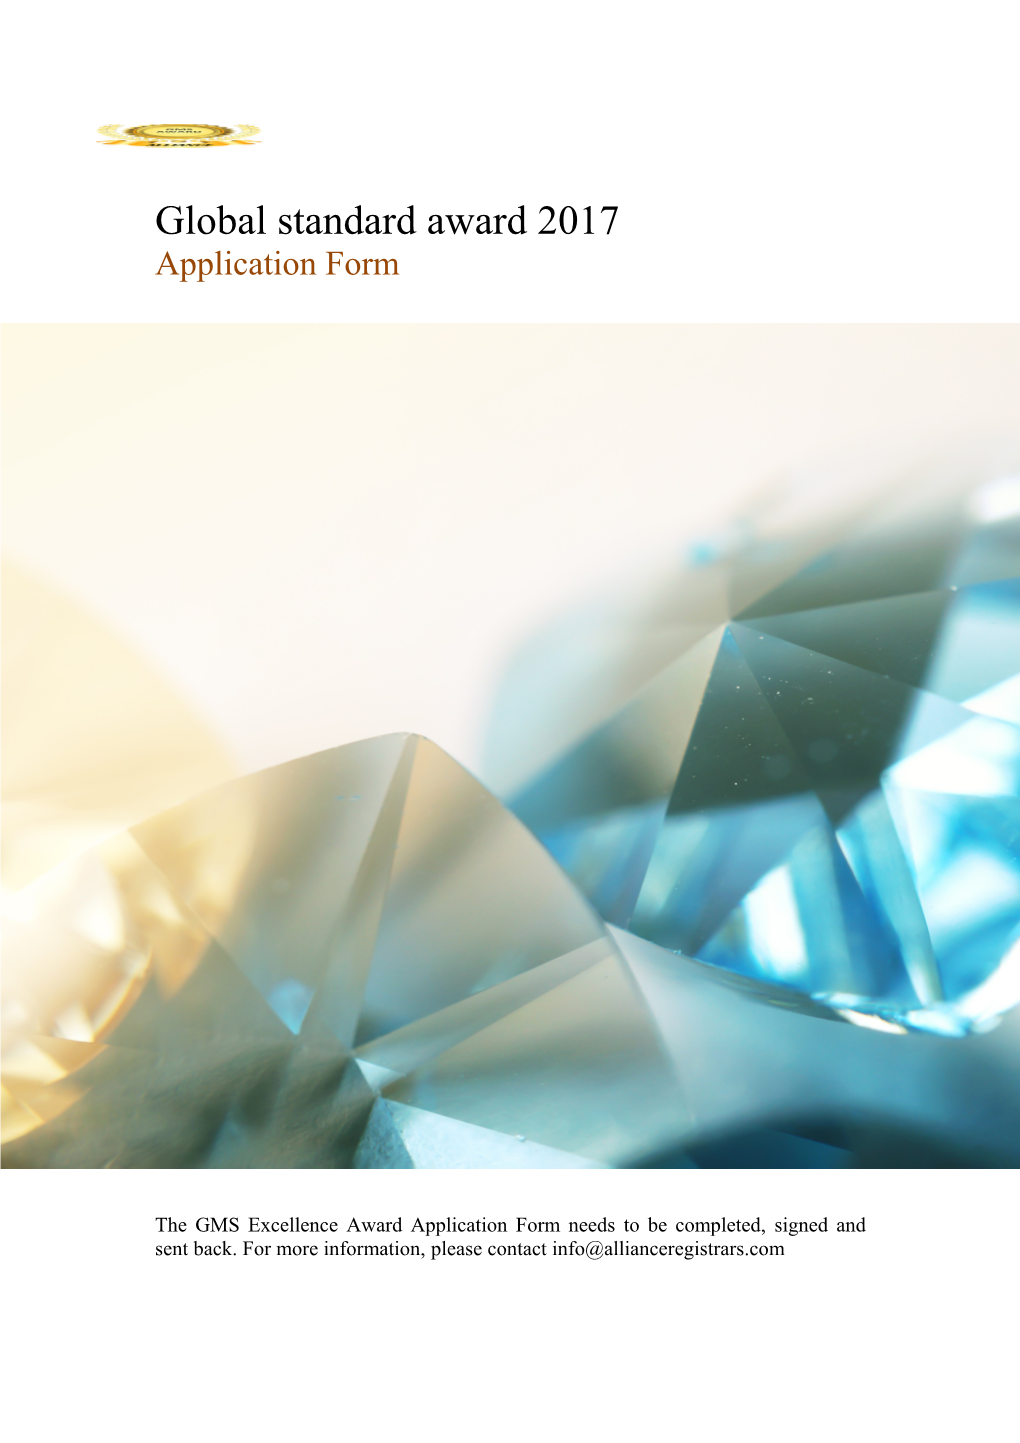 Global Standard Award 2017